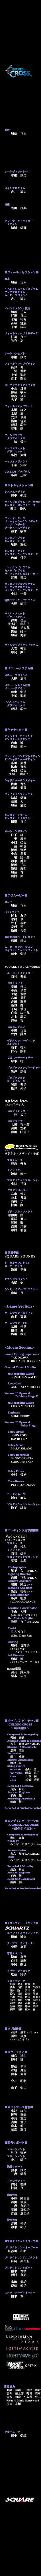 Chrono Cross - The Radical Dreamers Edition - Staff Roll (Japanese)